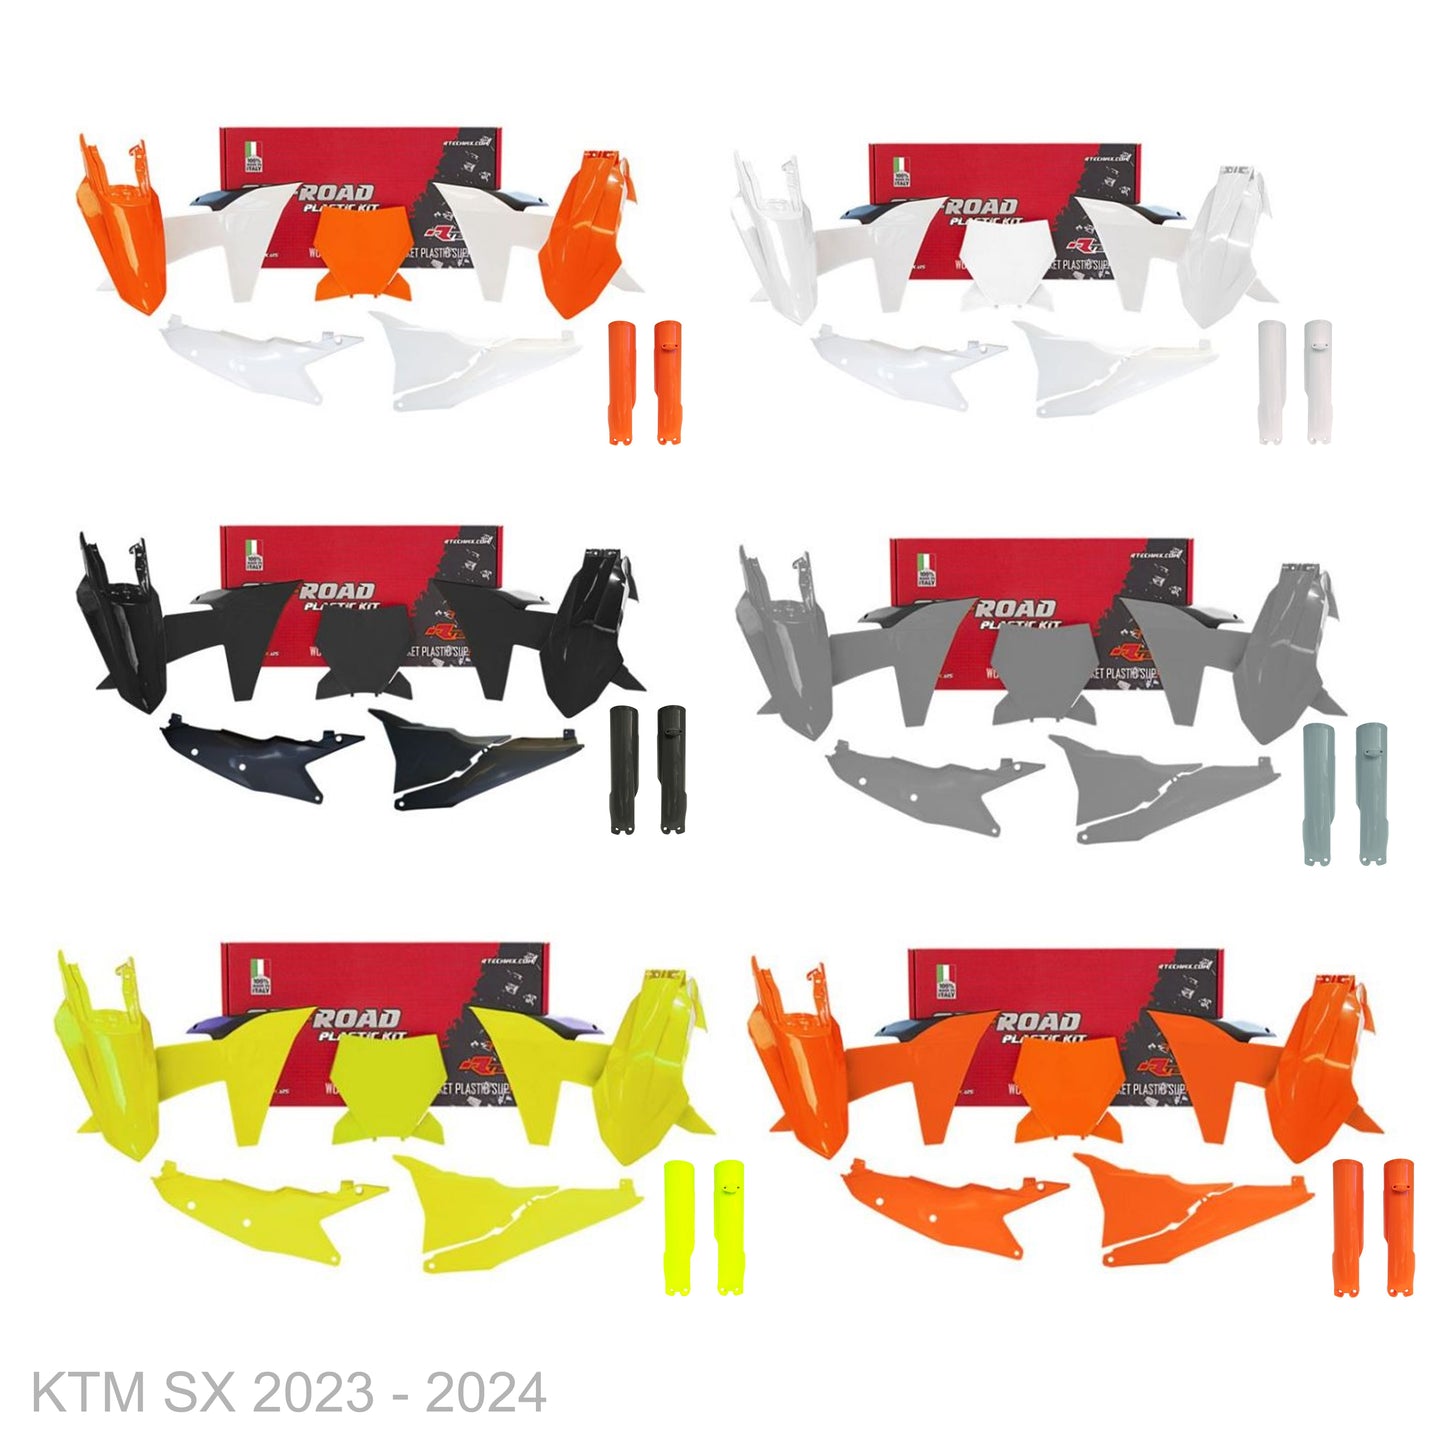 KTM SX/SXF 125/250/300/350/450 2023 - 2024 Factory Graphics Kit